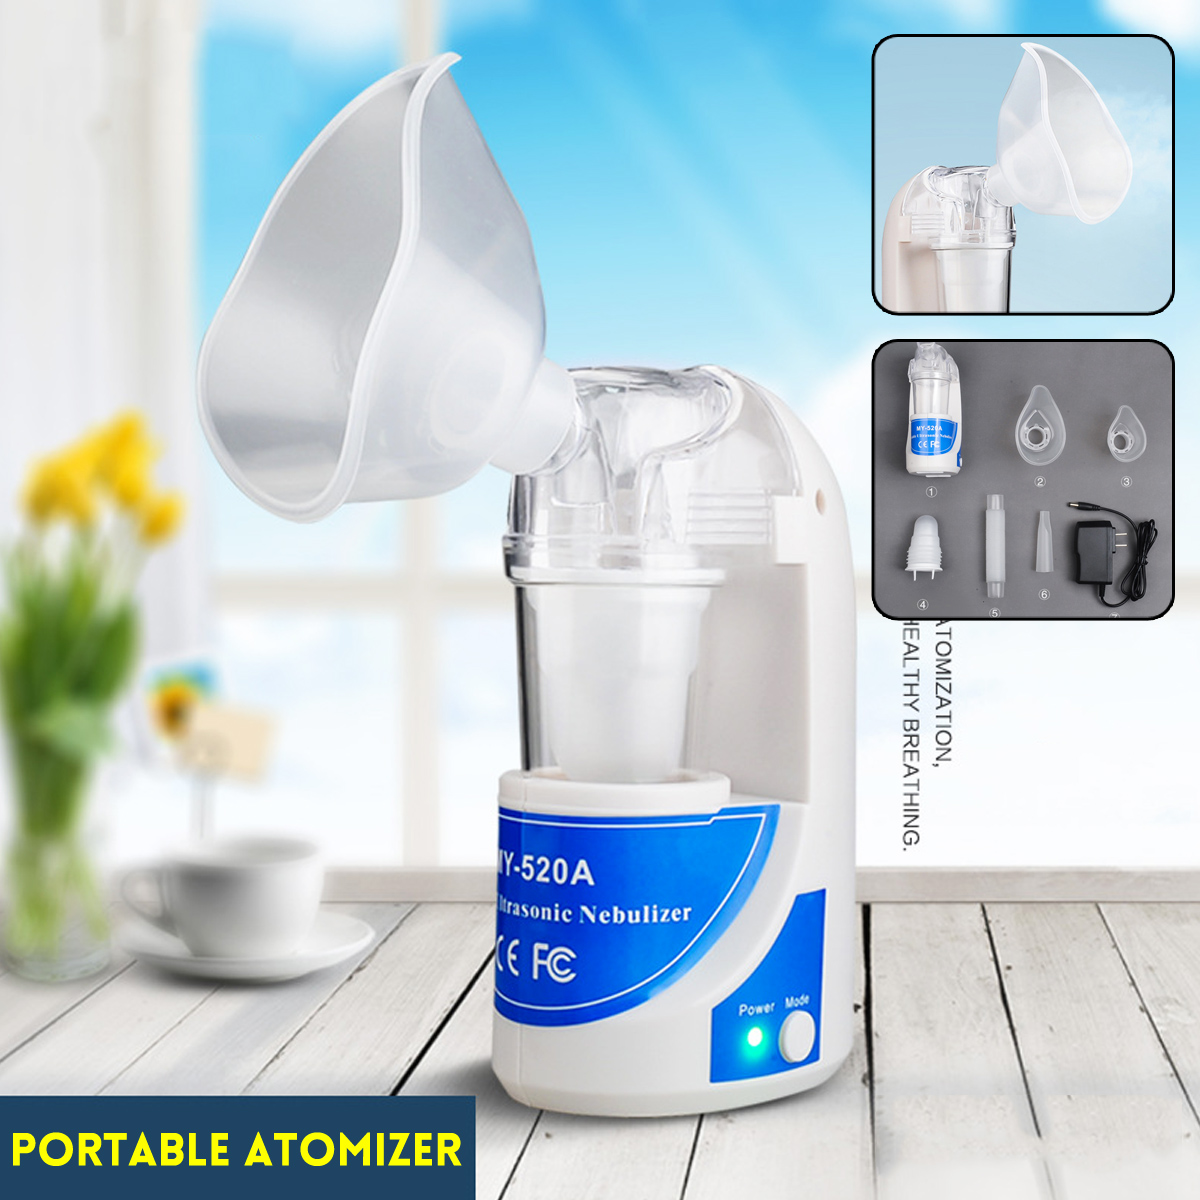 Portable Atomizer Handheld Nebulizer Humidifier Respirator Steam Inhaler For Adult & Child